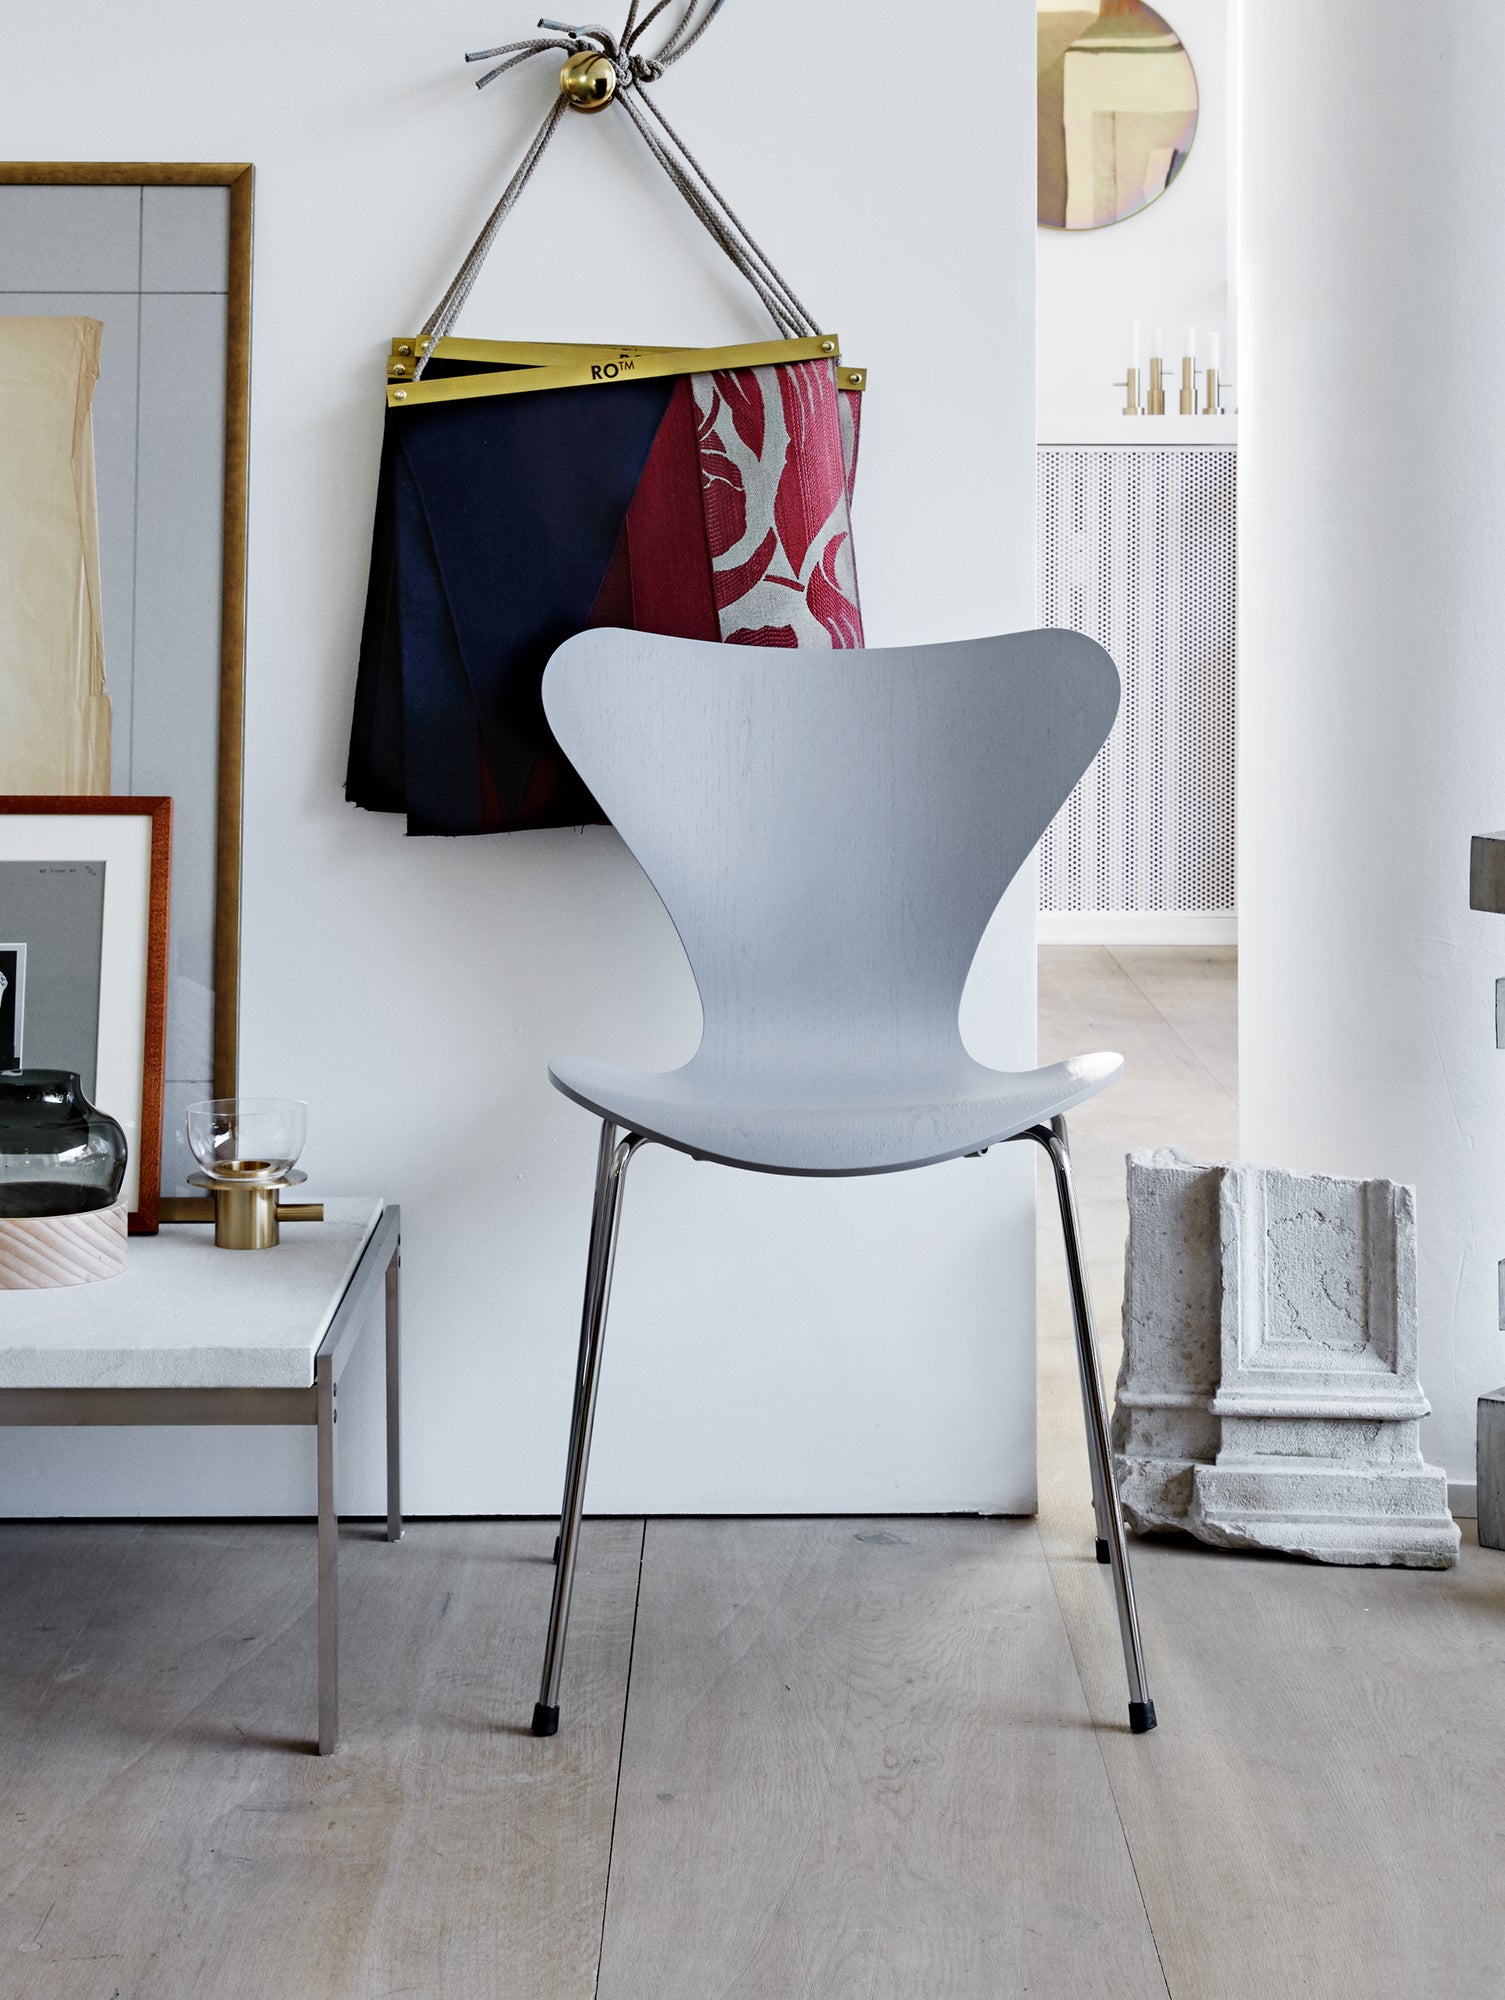 Series 7™ 3107 Dining Chair by Fritz Hansen - Nine Grey Coloured Ash Veneer Shell / Chromed Steel